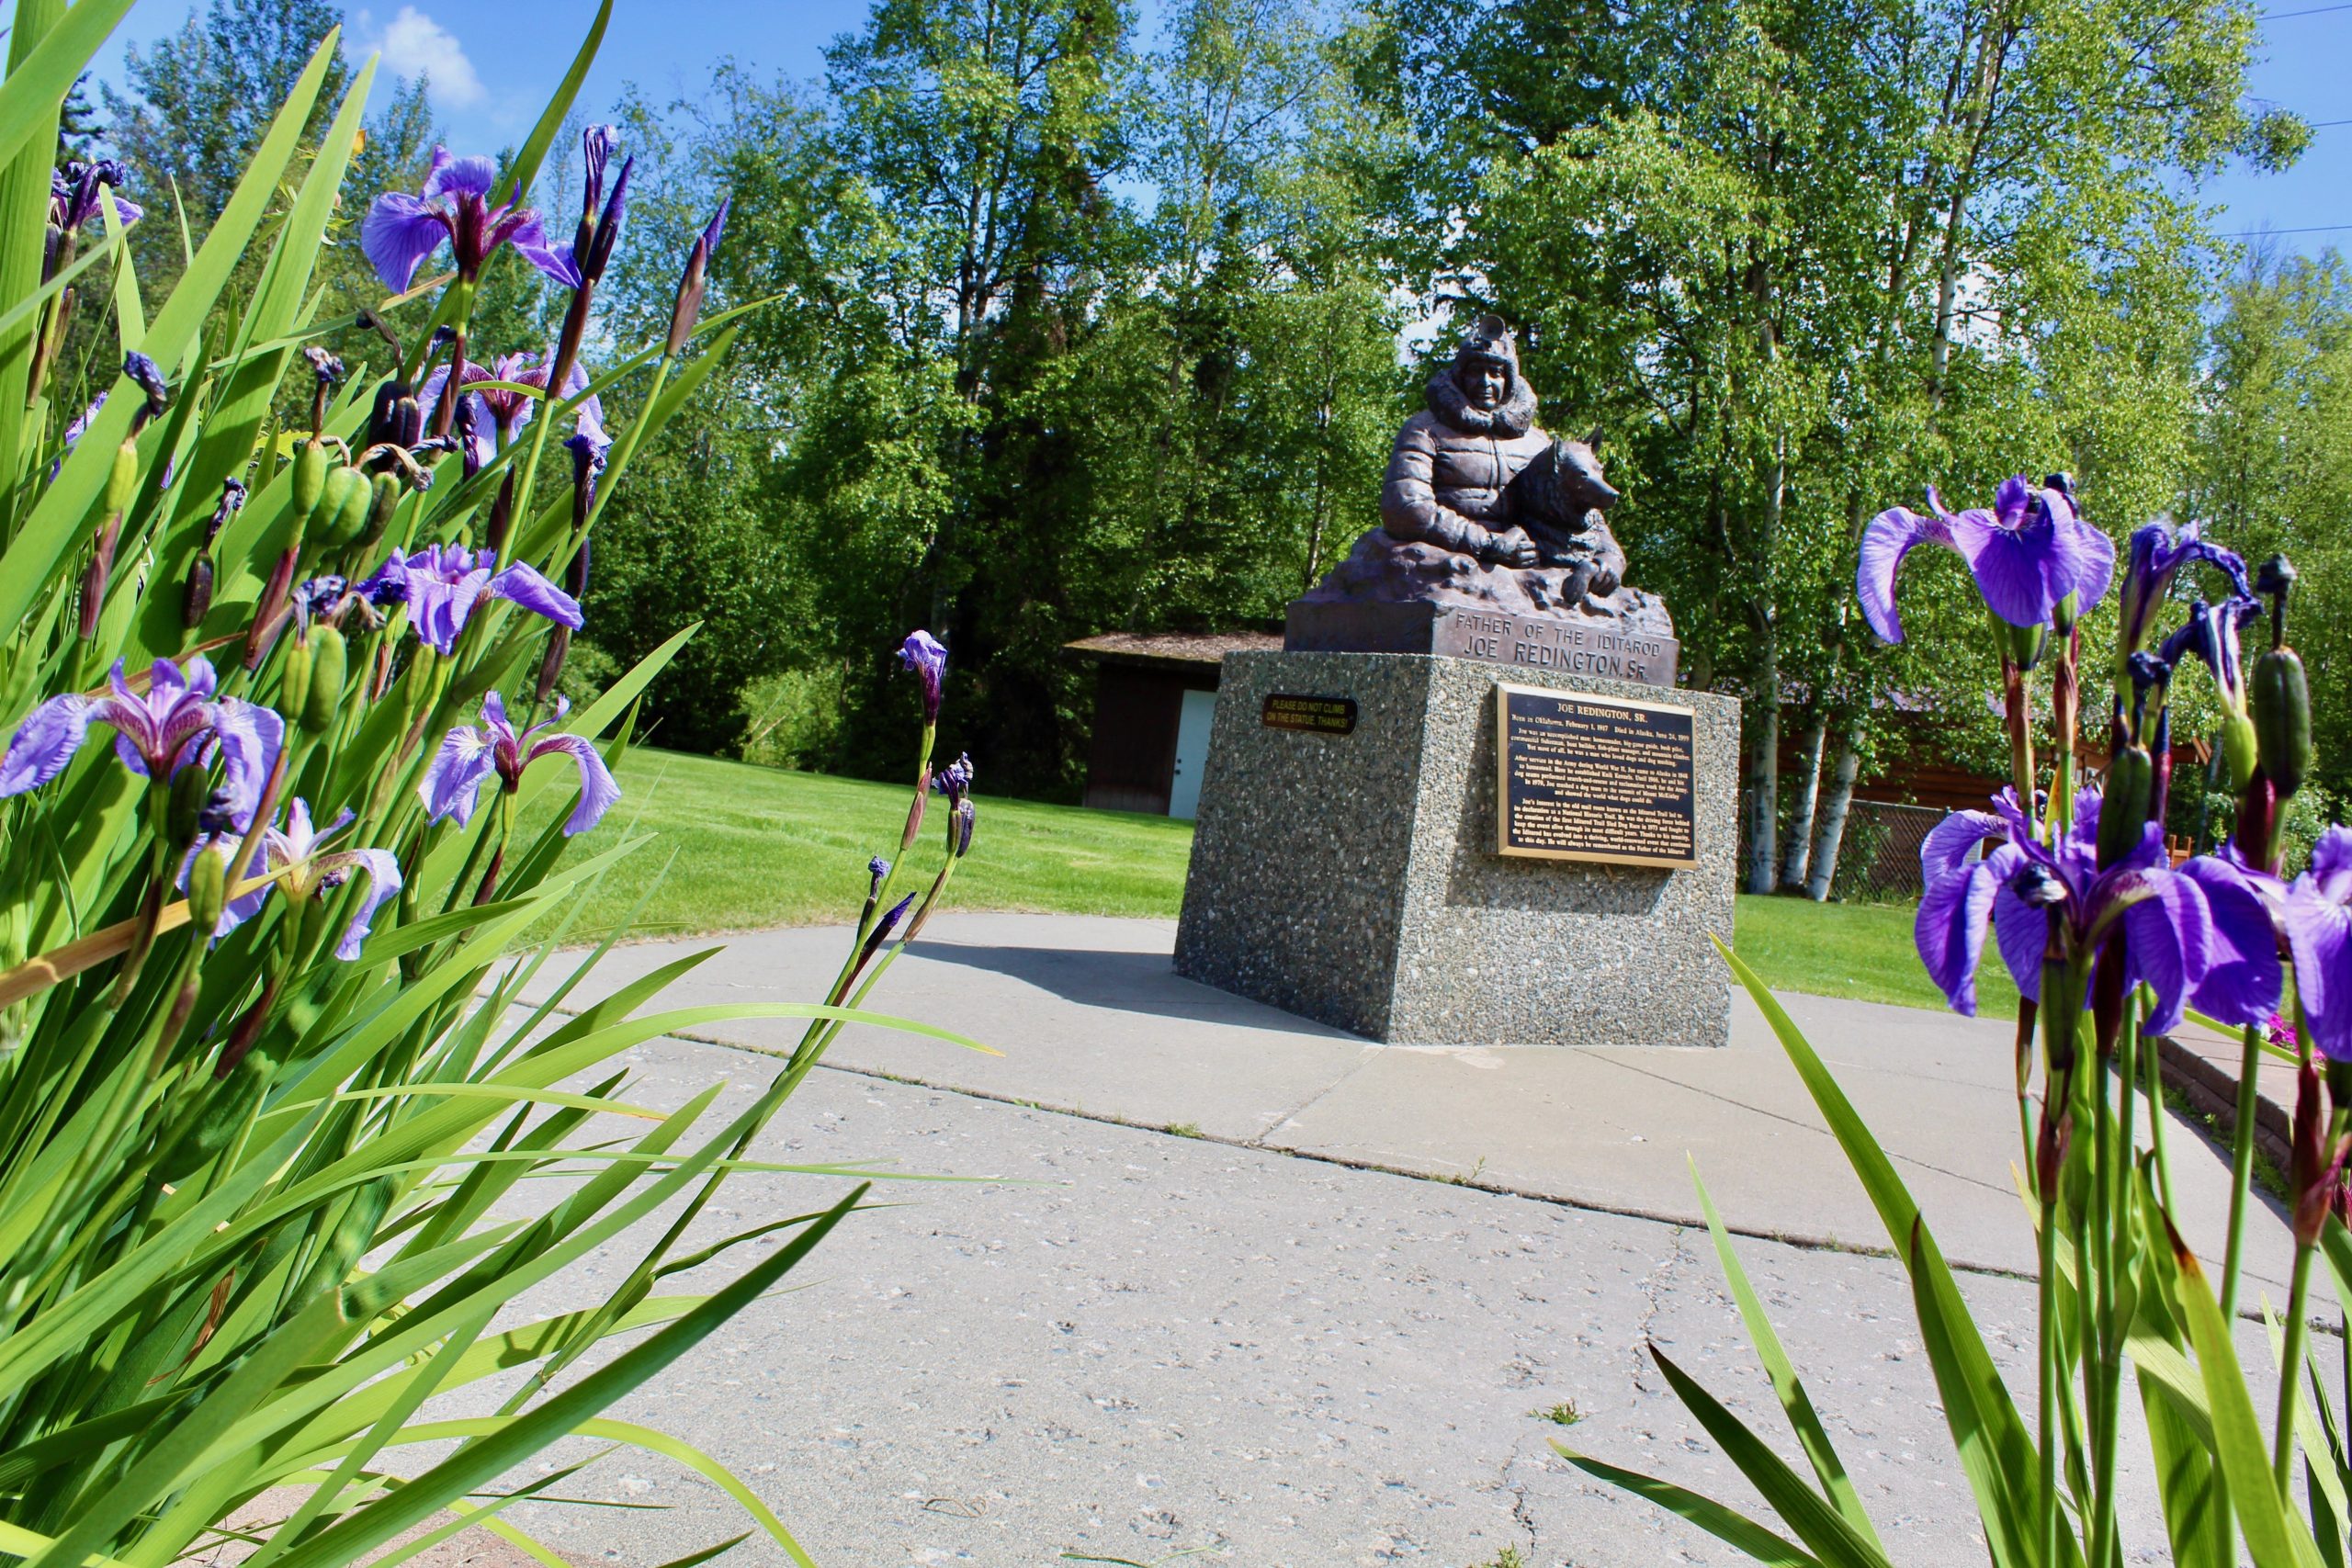 Redington Statue Iditarod Headquarters